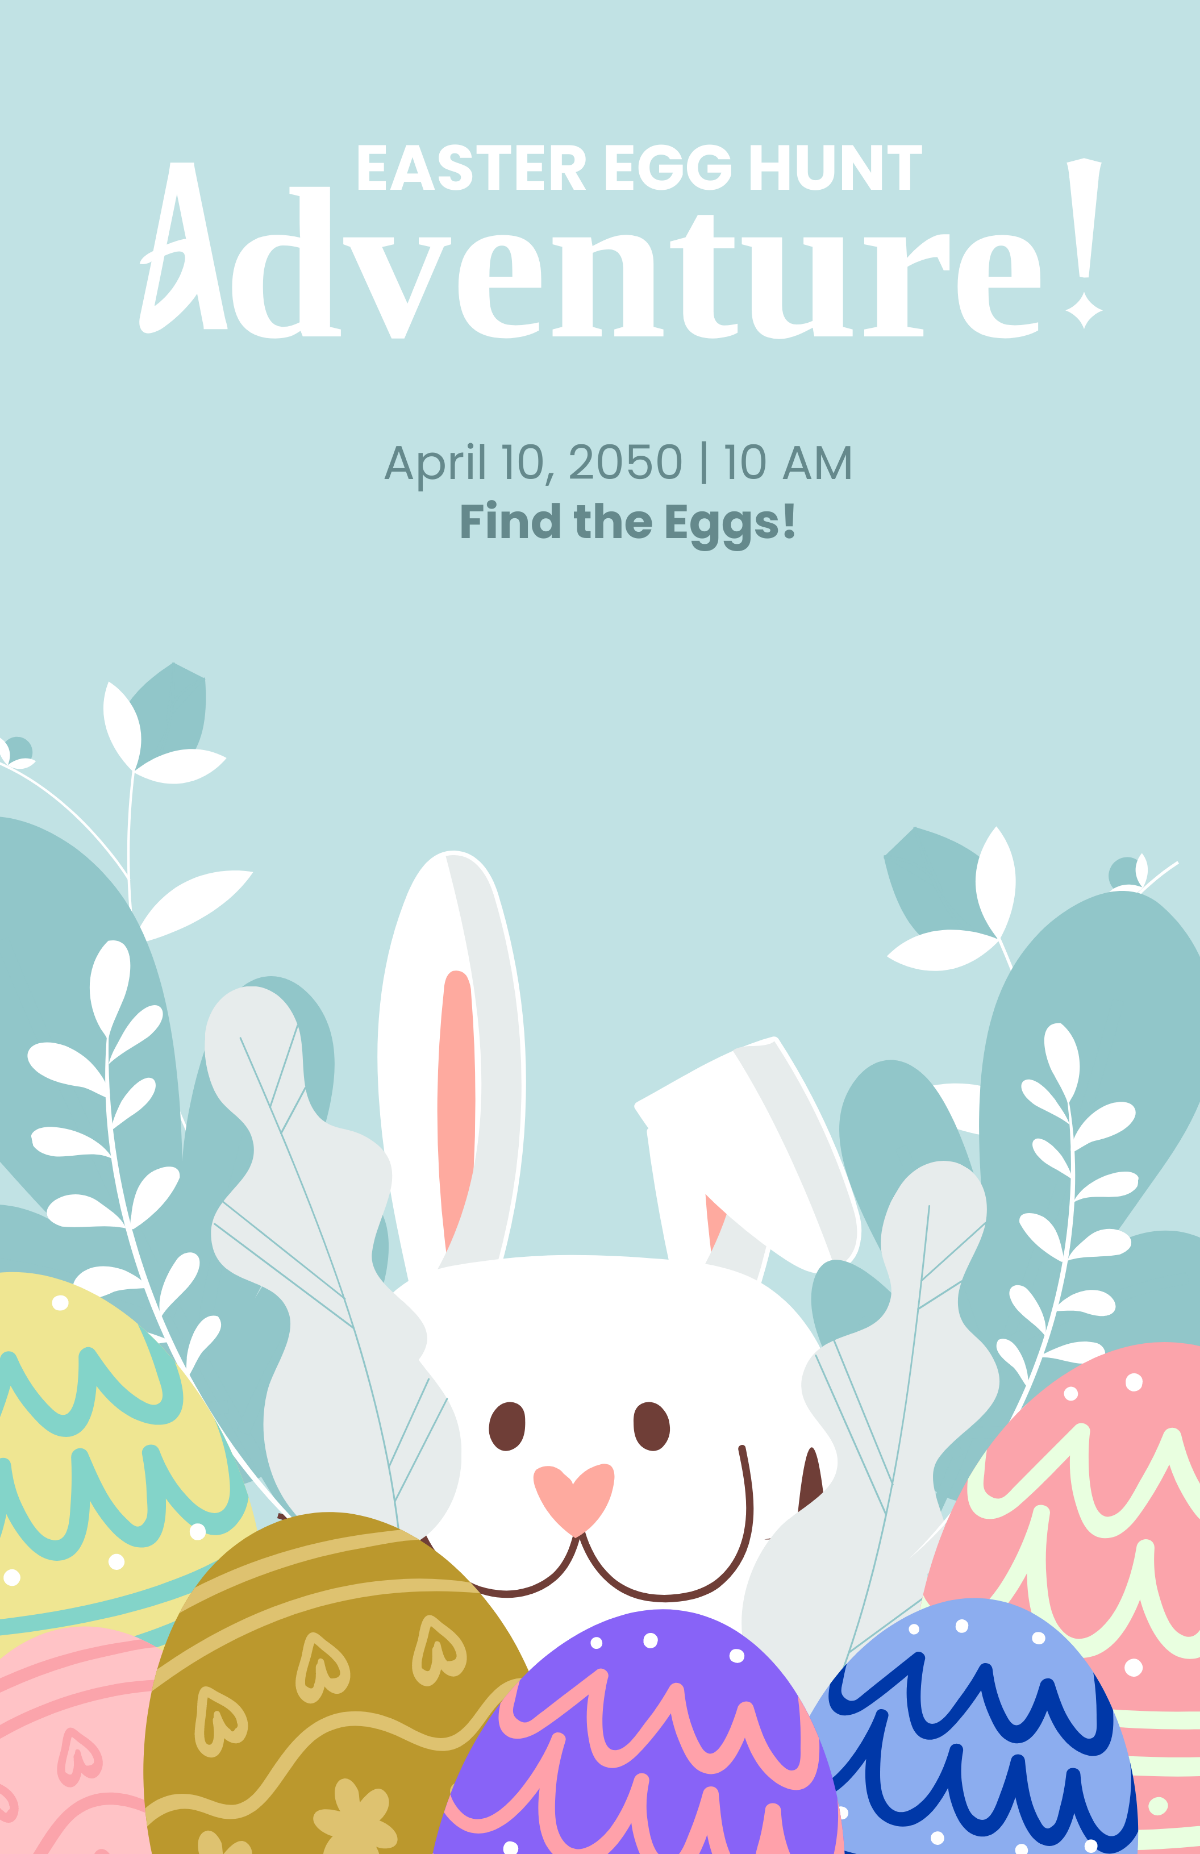 Easter Egg Hunt Event Template